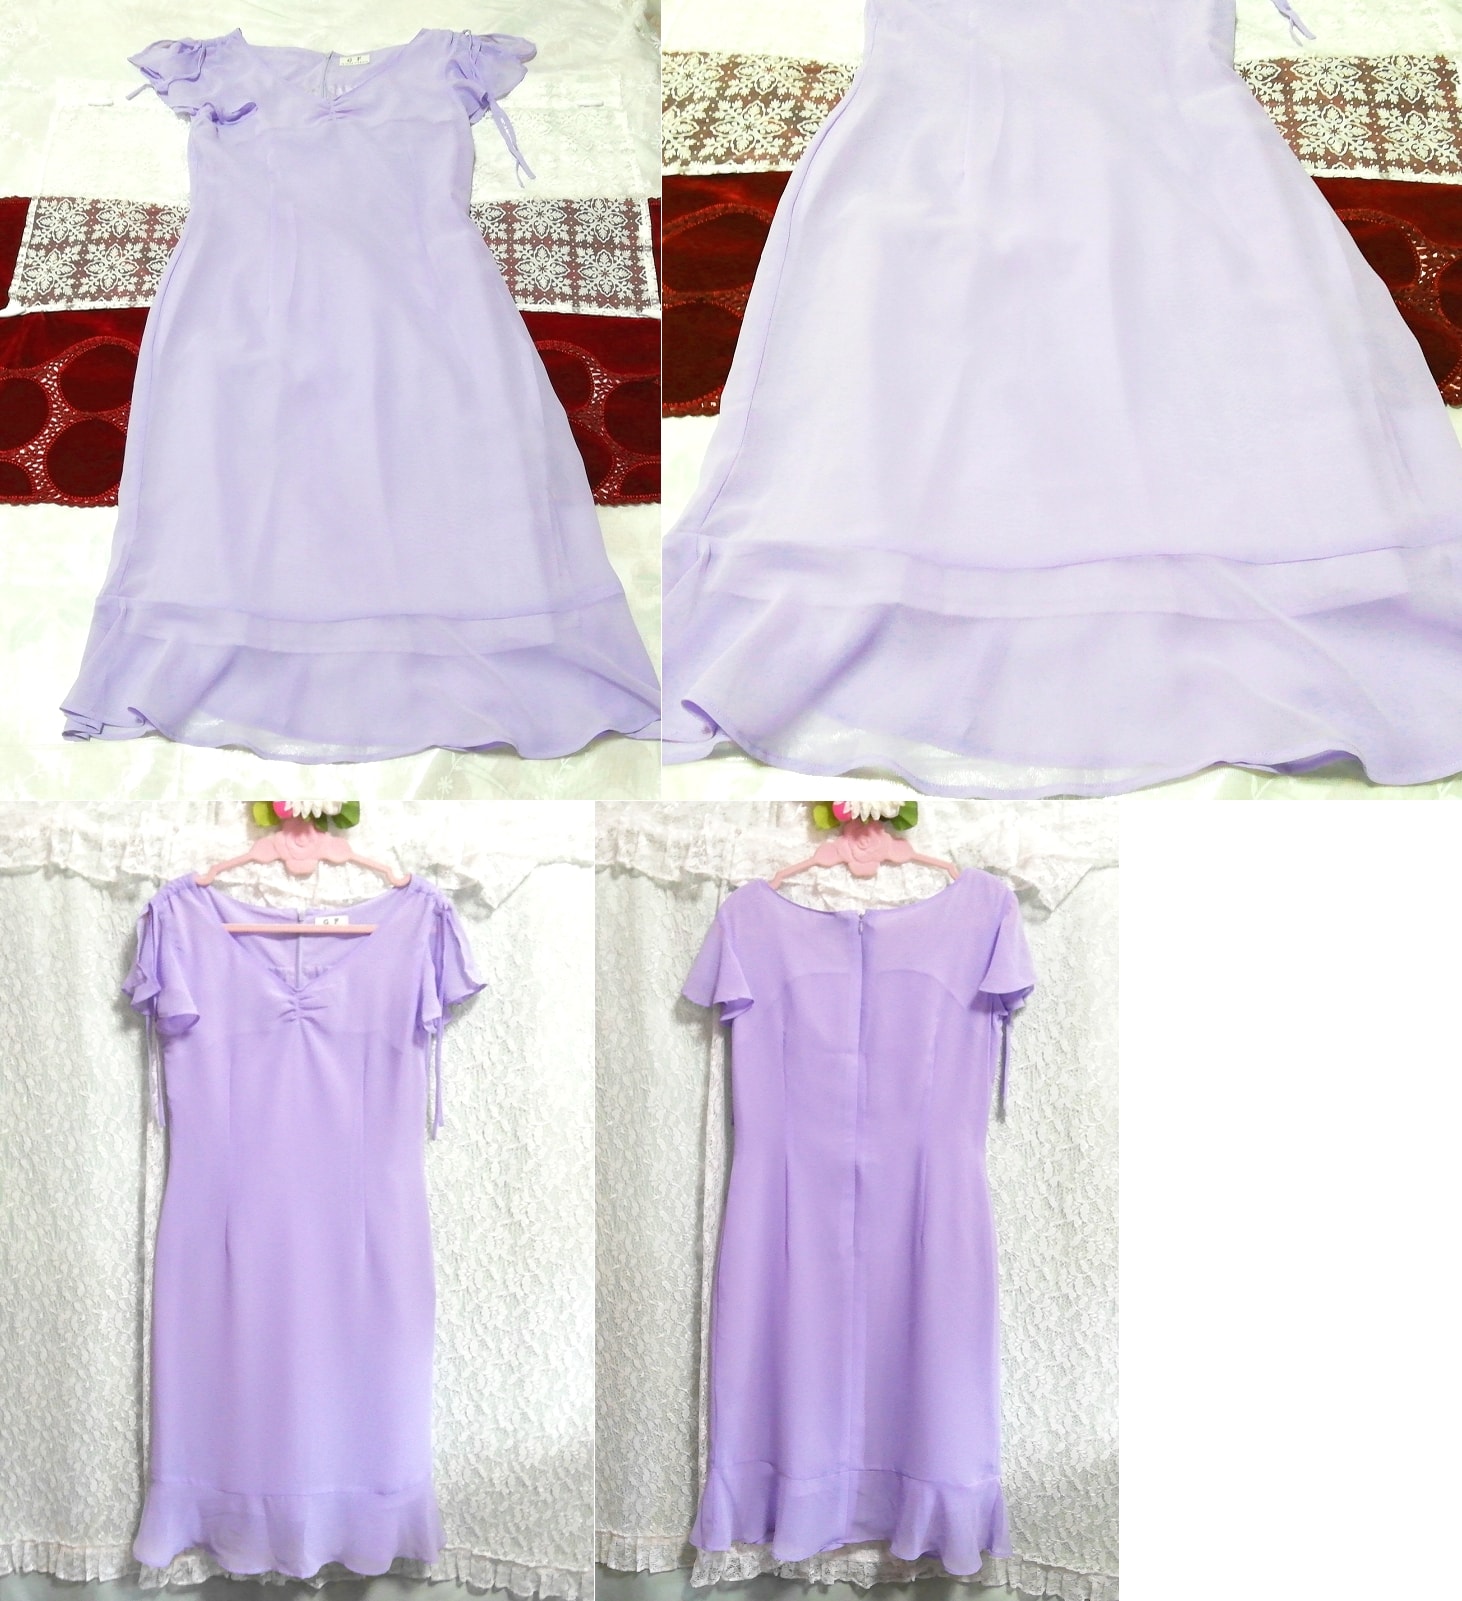 Purple chiffon negligee nightgown nightwear short sleeve dress, fashion, ladies' fashion, nightwear, pajamas